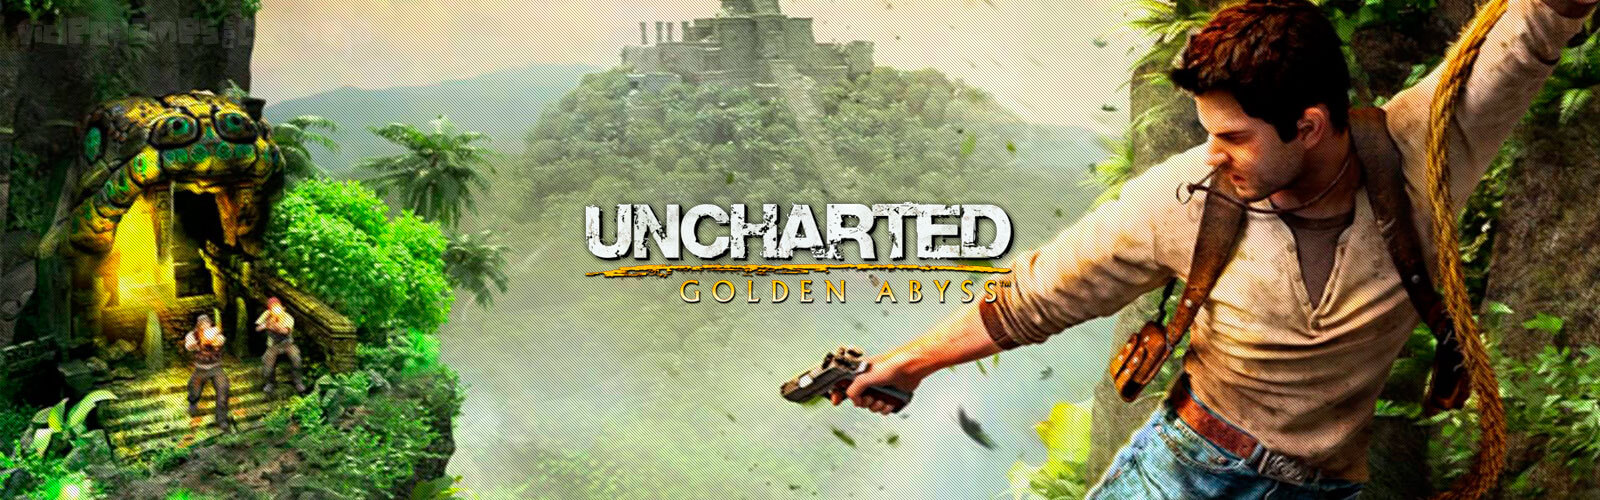 Análise tecnológica: Uncharted: Golden Abyss